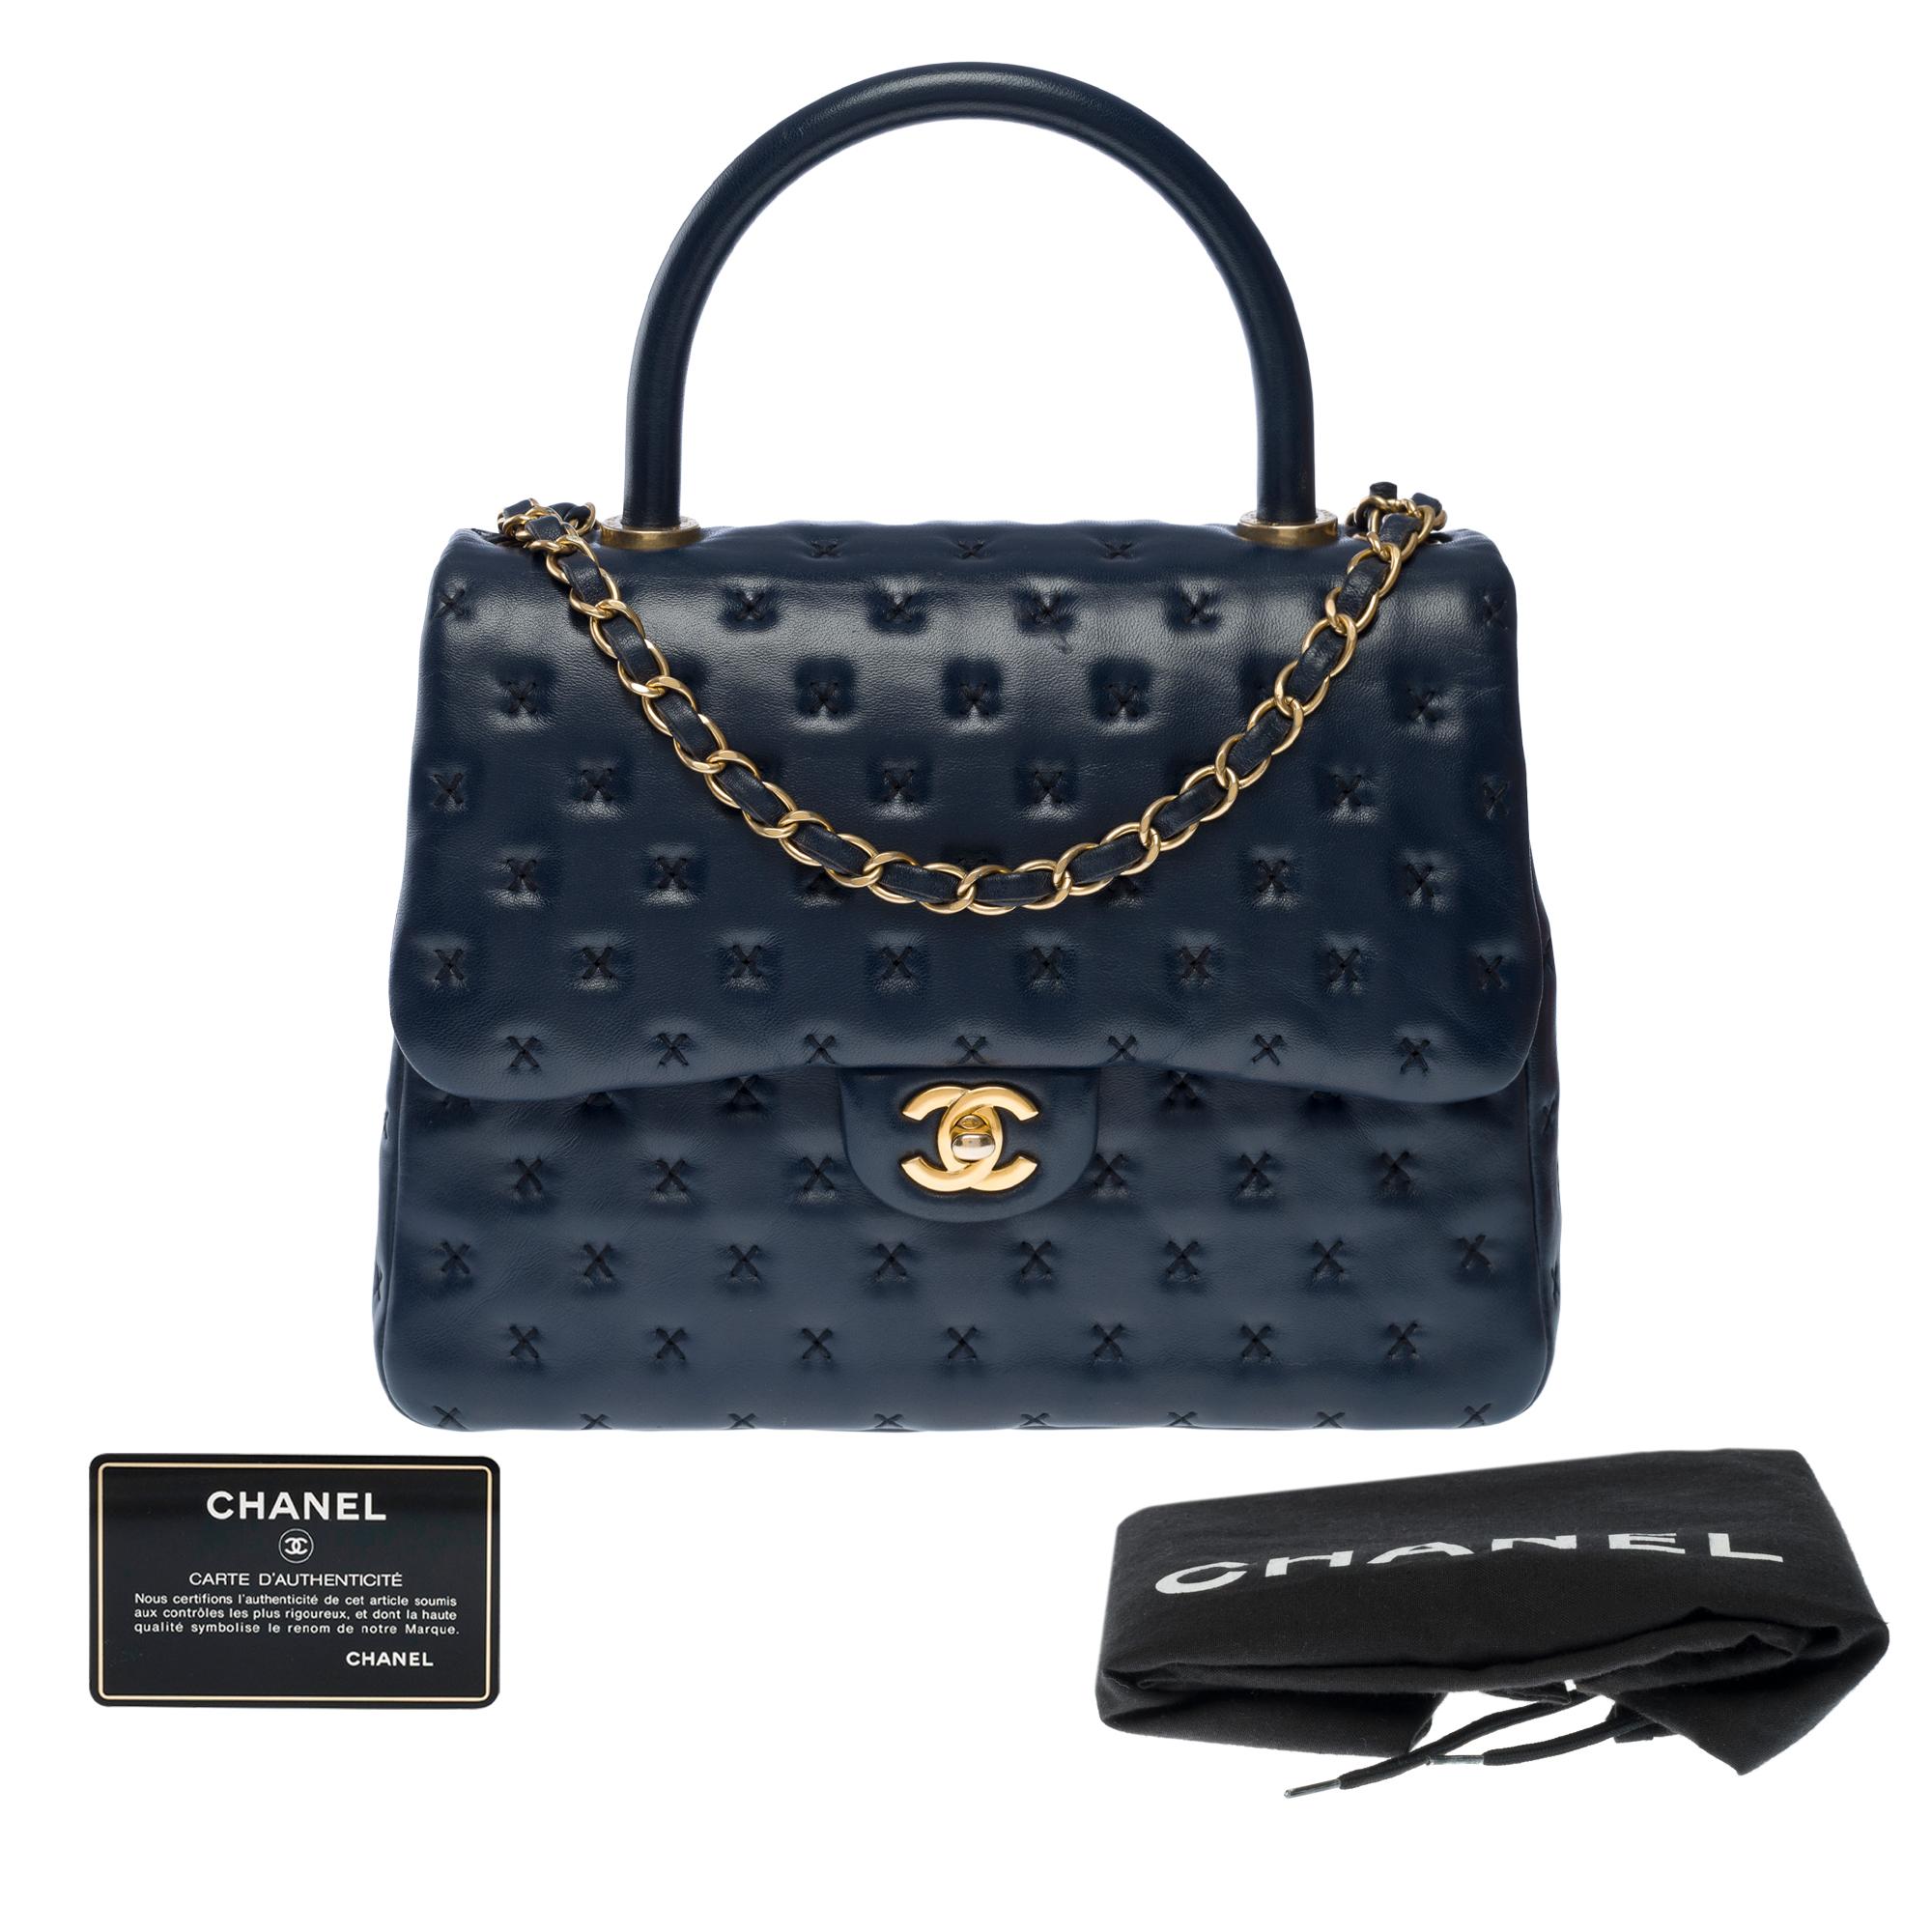 FW2016 Paris-Rome- Chanel Coco handle handbag in Navy blue lambskin leather, GHW